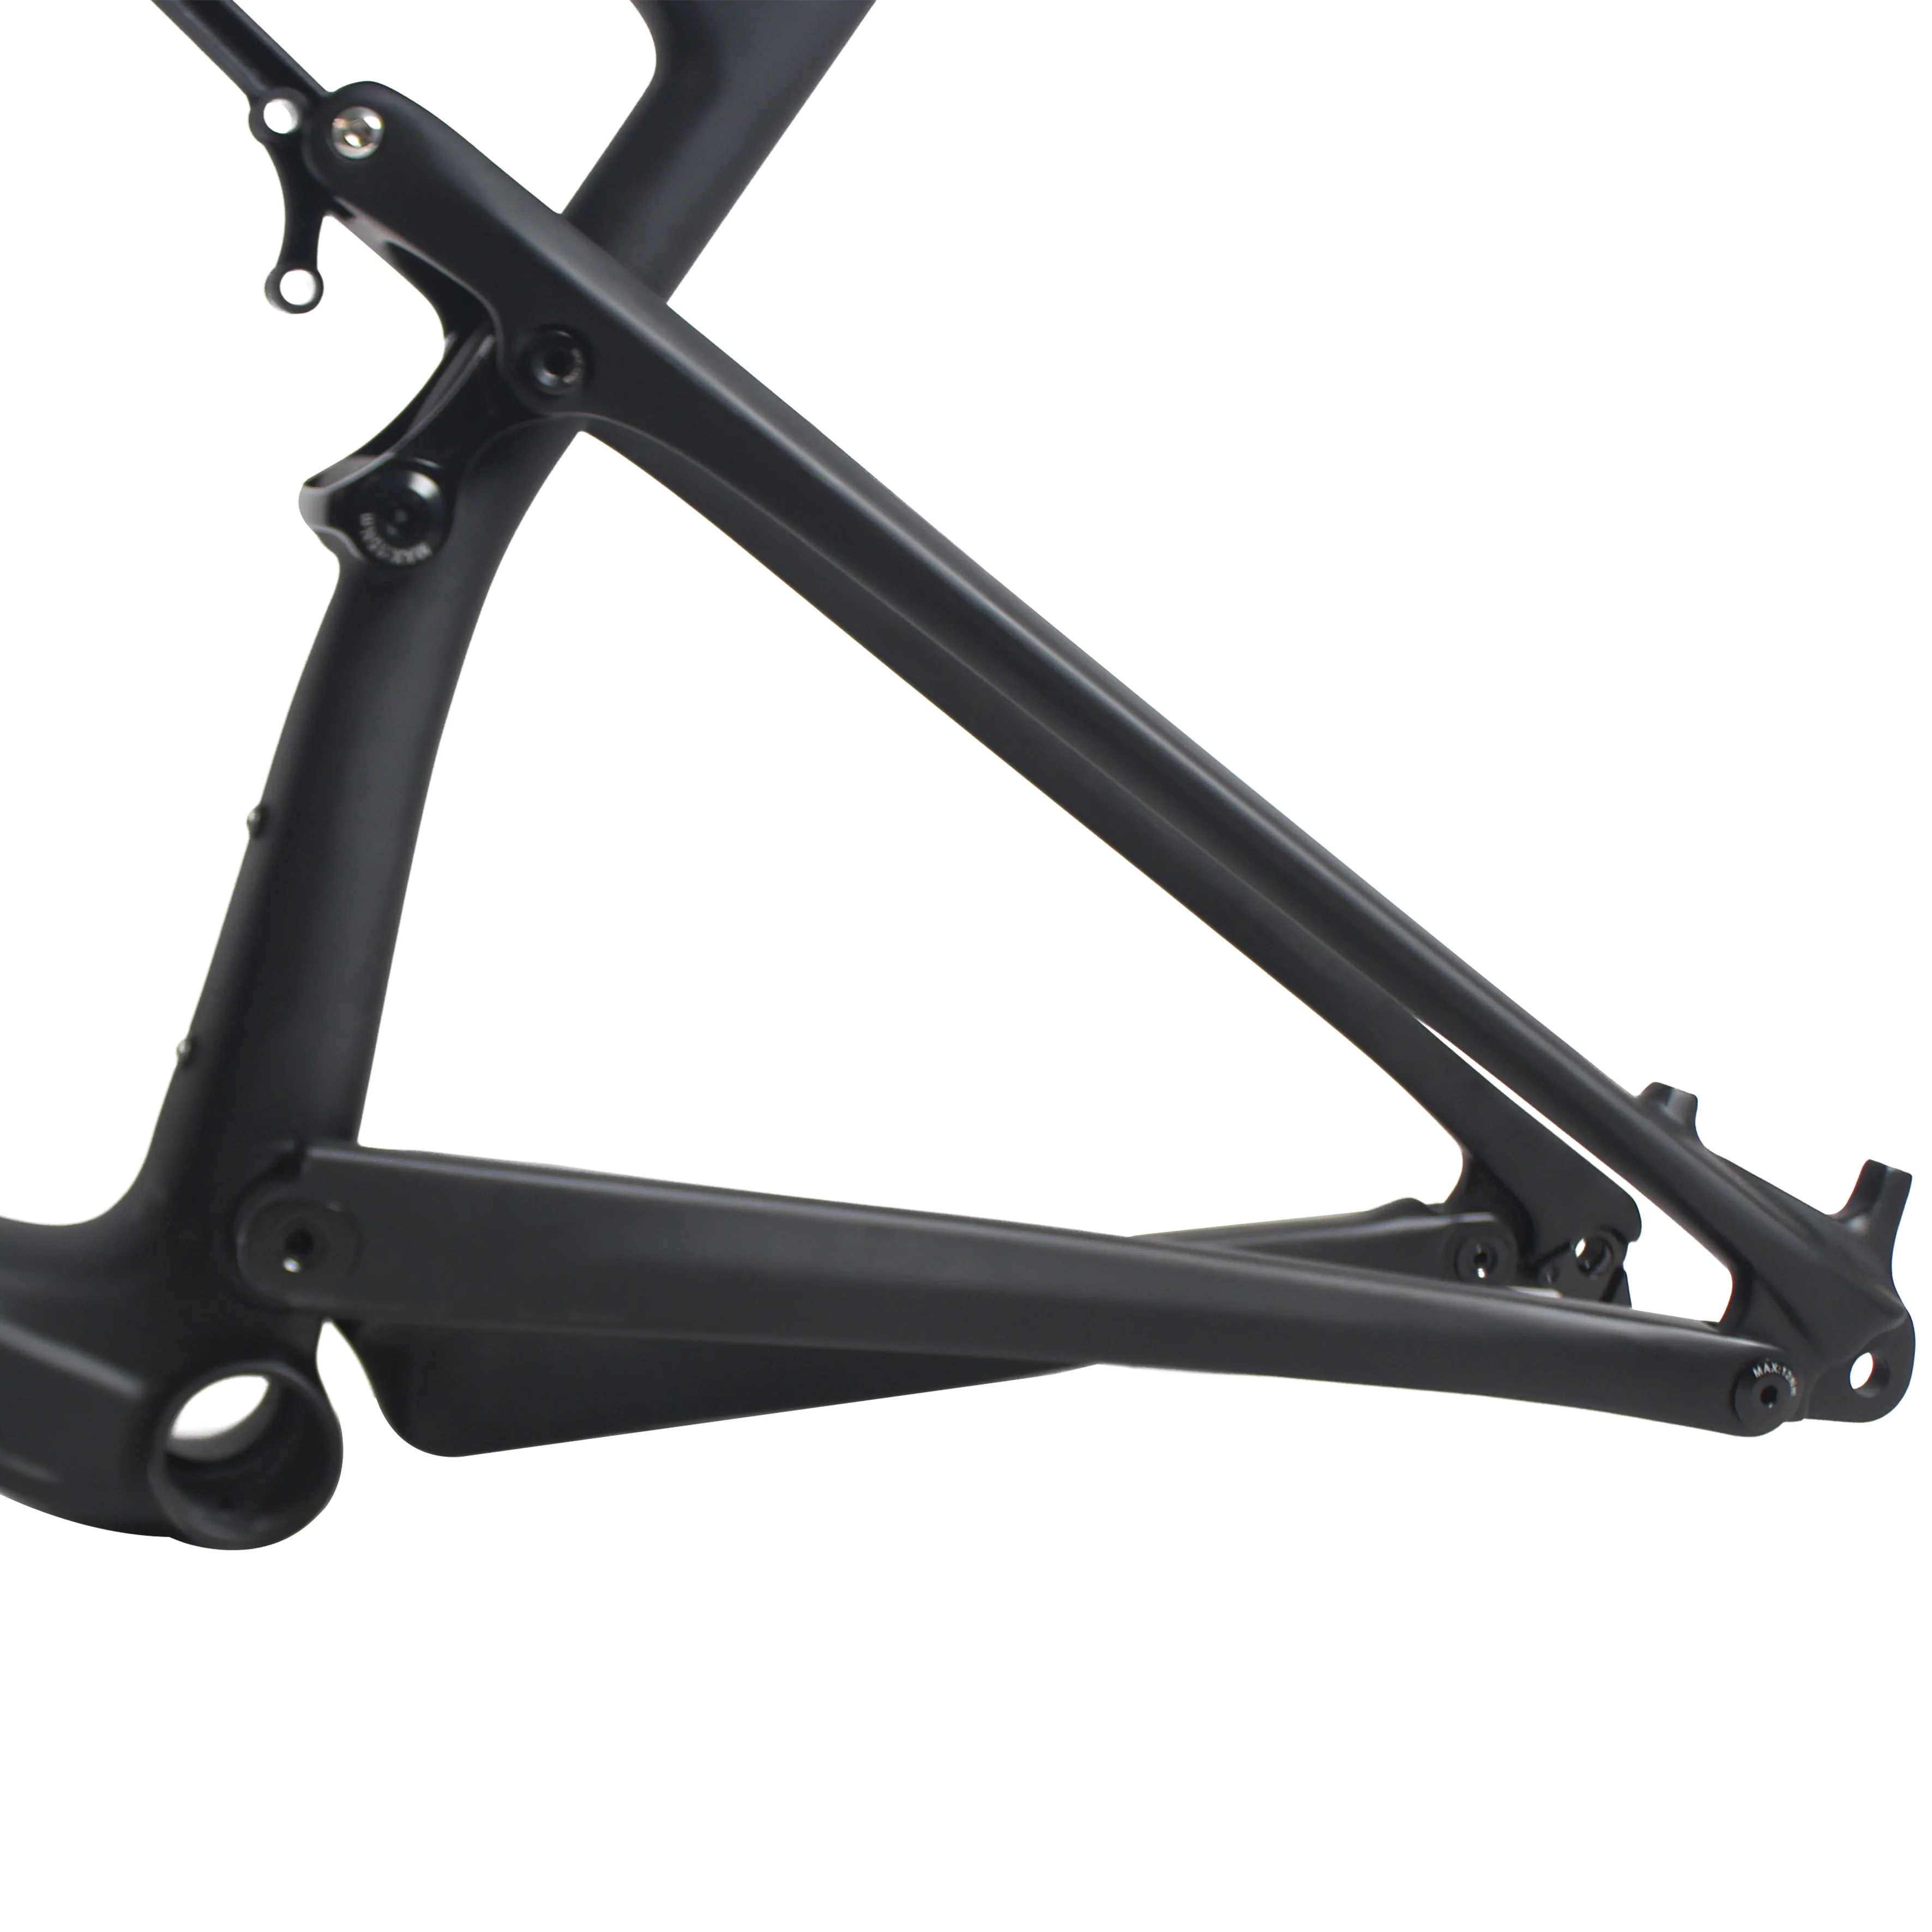 Sale 2018 carbon mountain bike suspension frame 29er Enduro mtb bicycle frameset 8